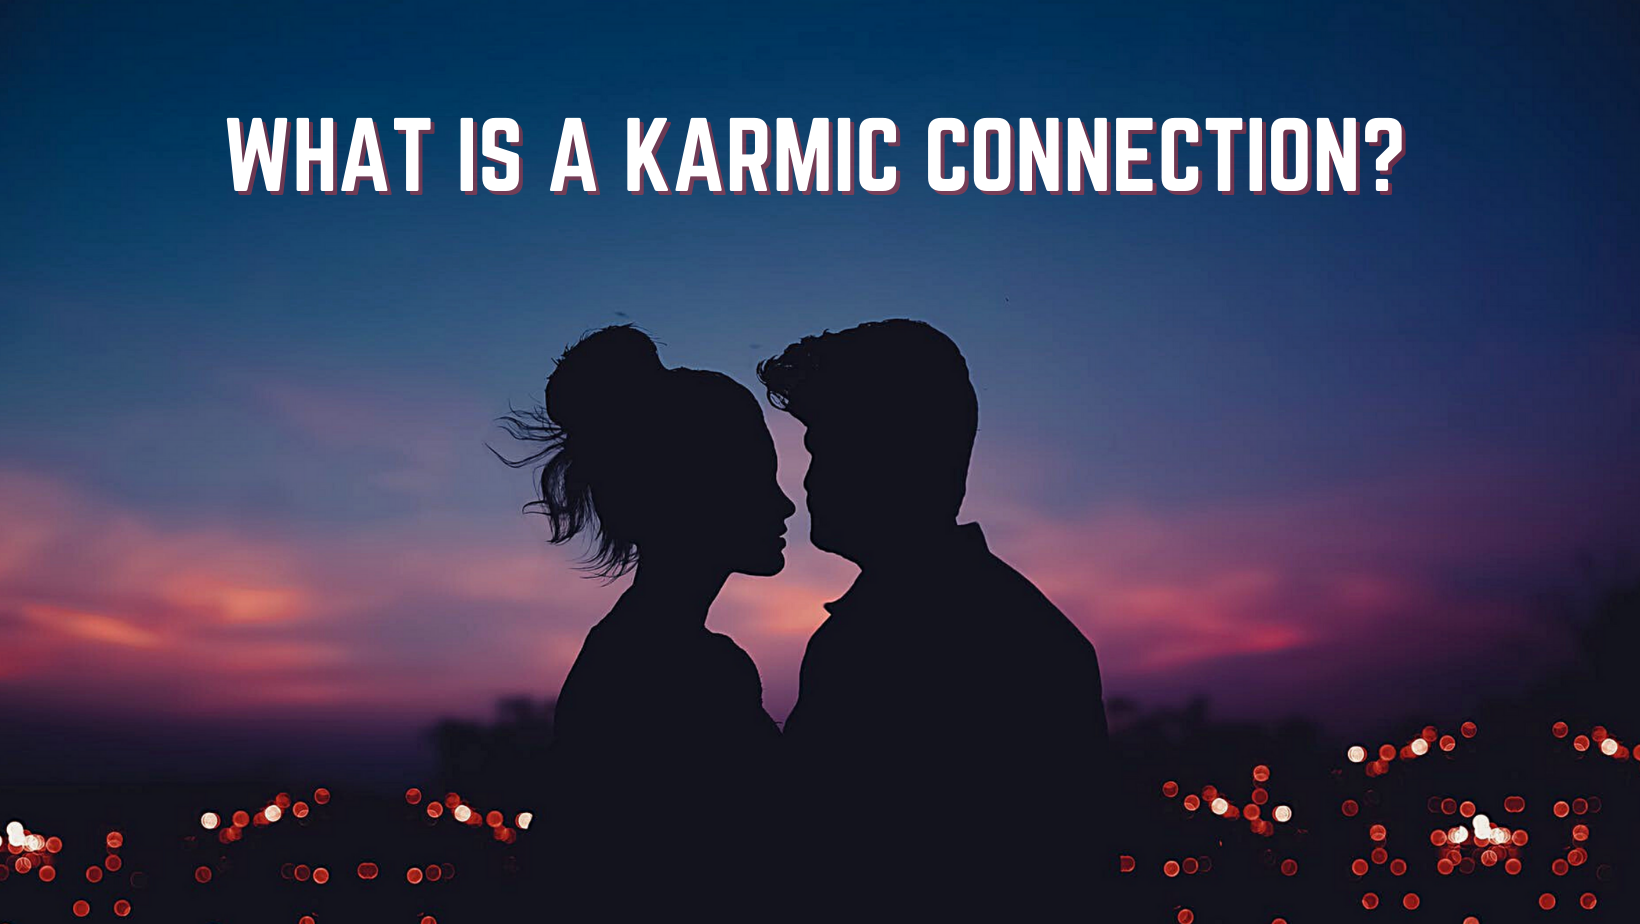 Karmic connection